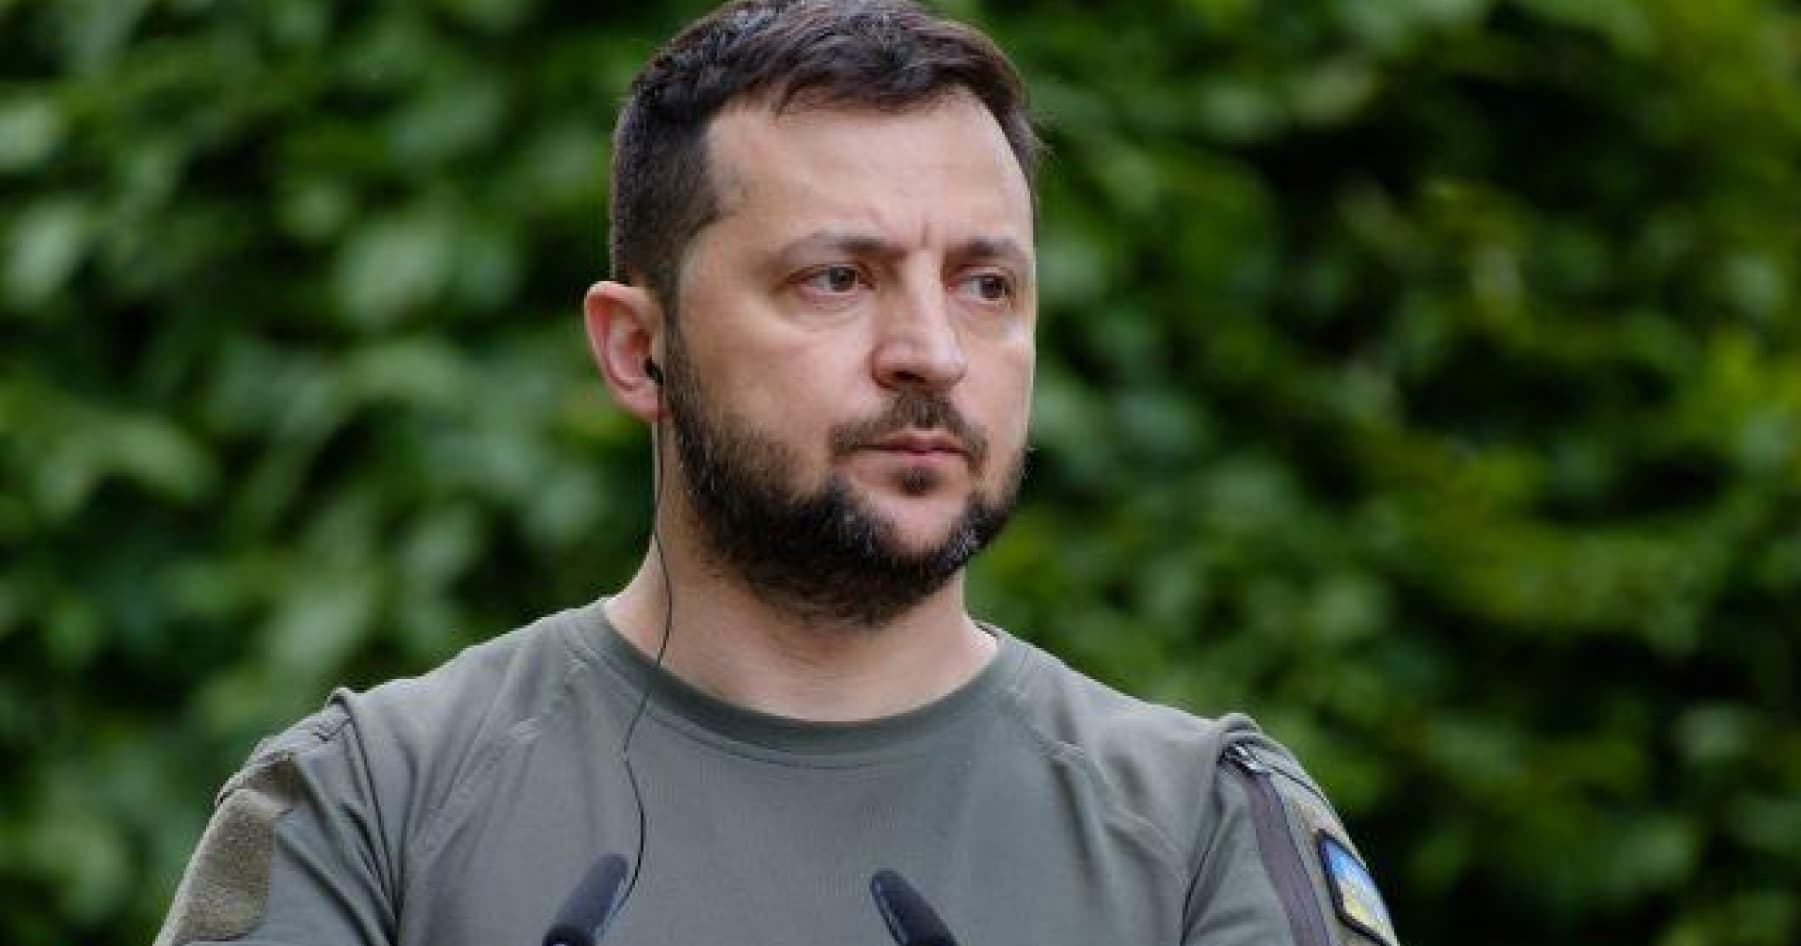 President Zelensky cancelled the autumn conscription and postponed demobilization in Ukraine